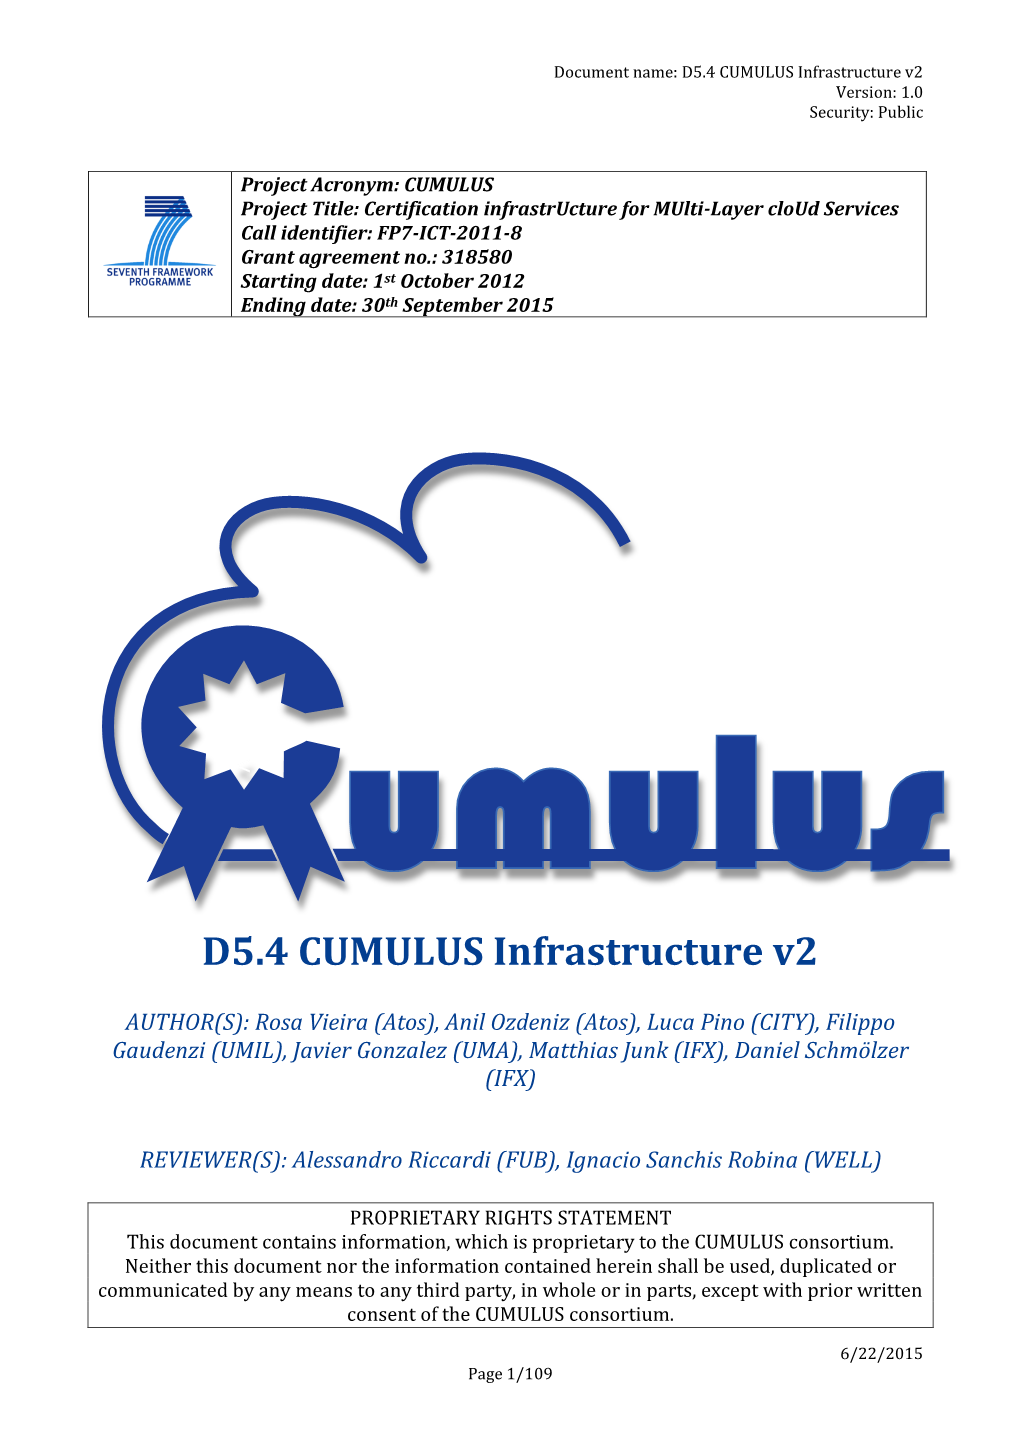 CUMULUS Infrastructure V2 Version: 1.0 Security: Public